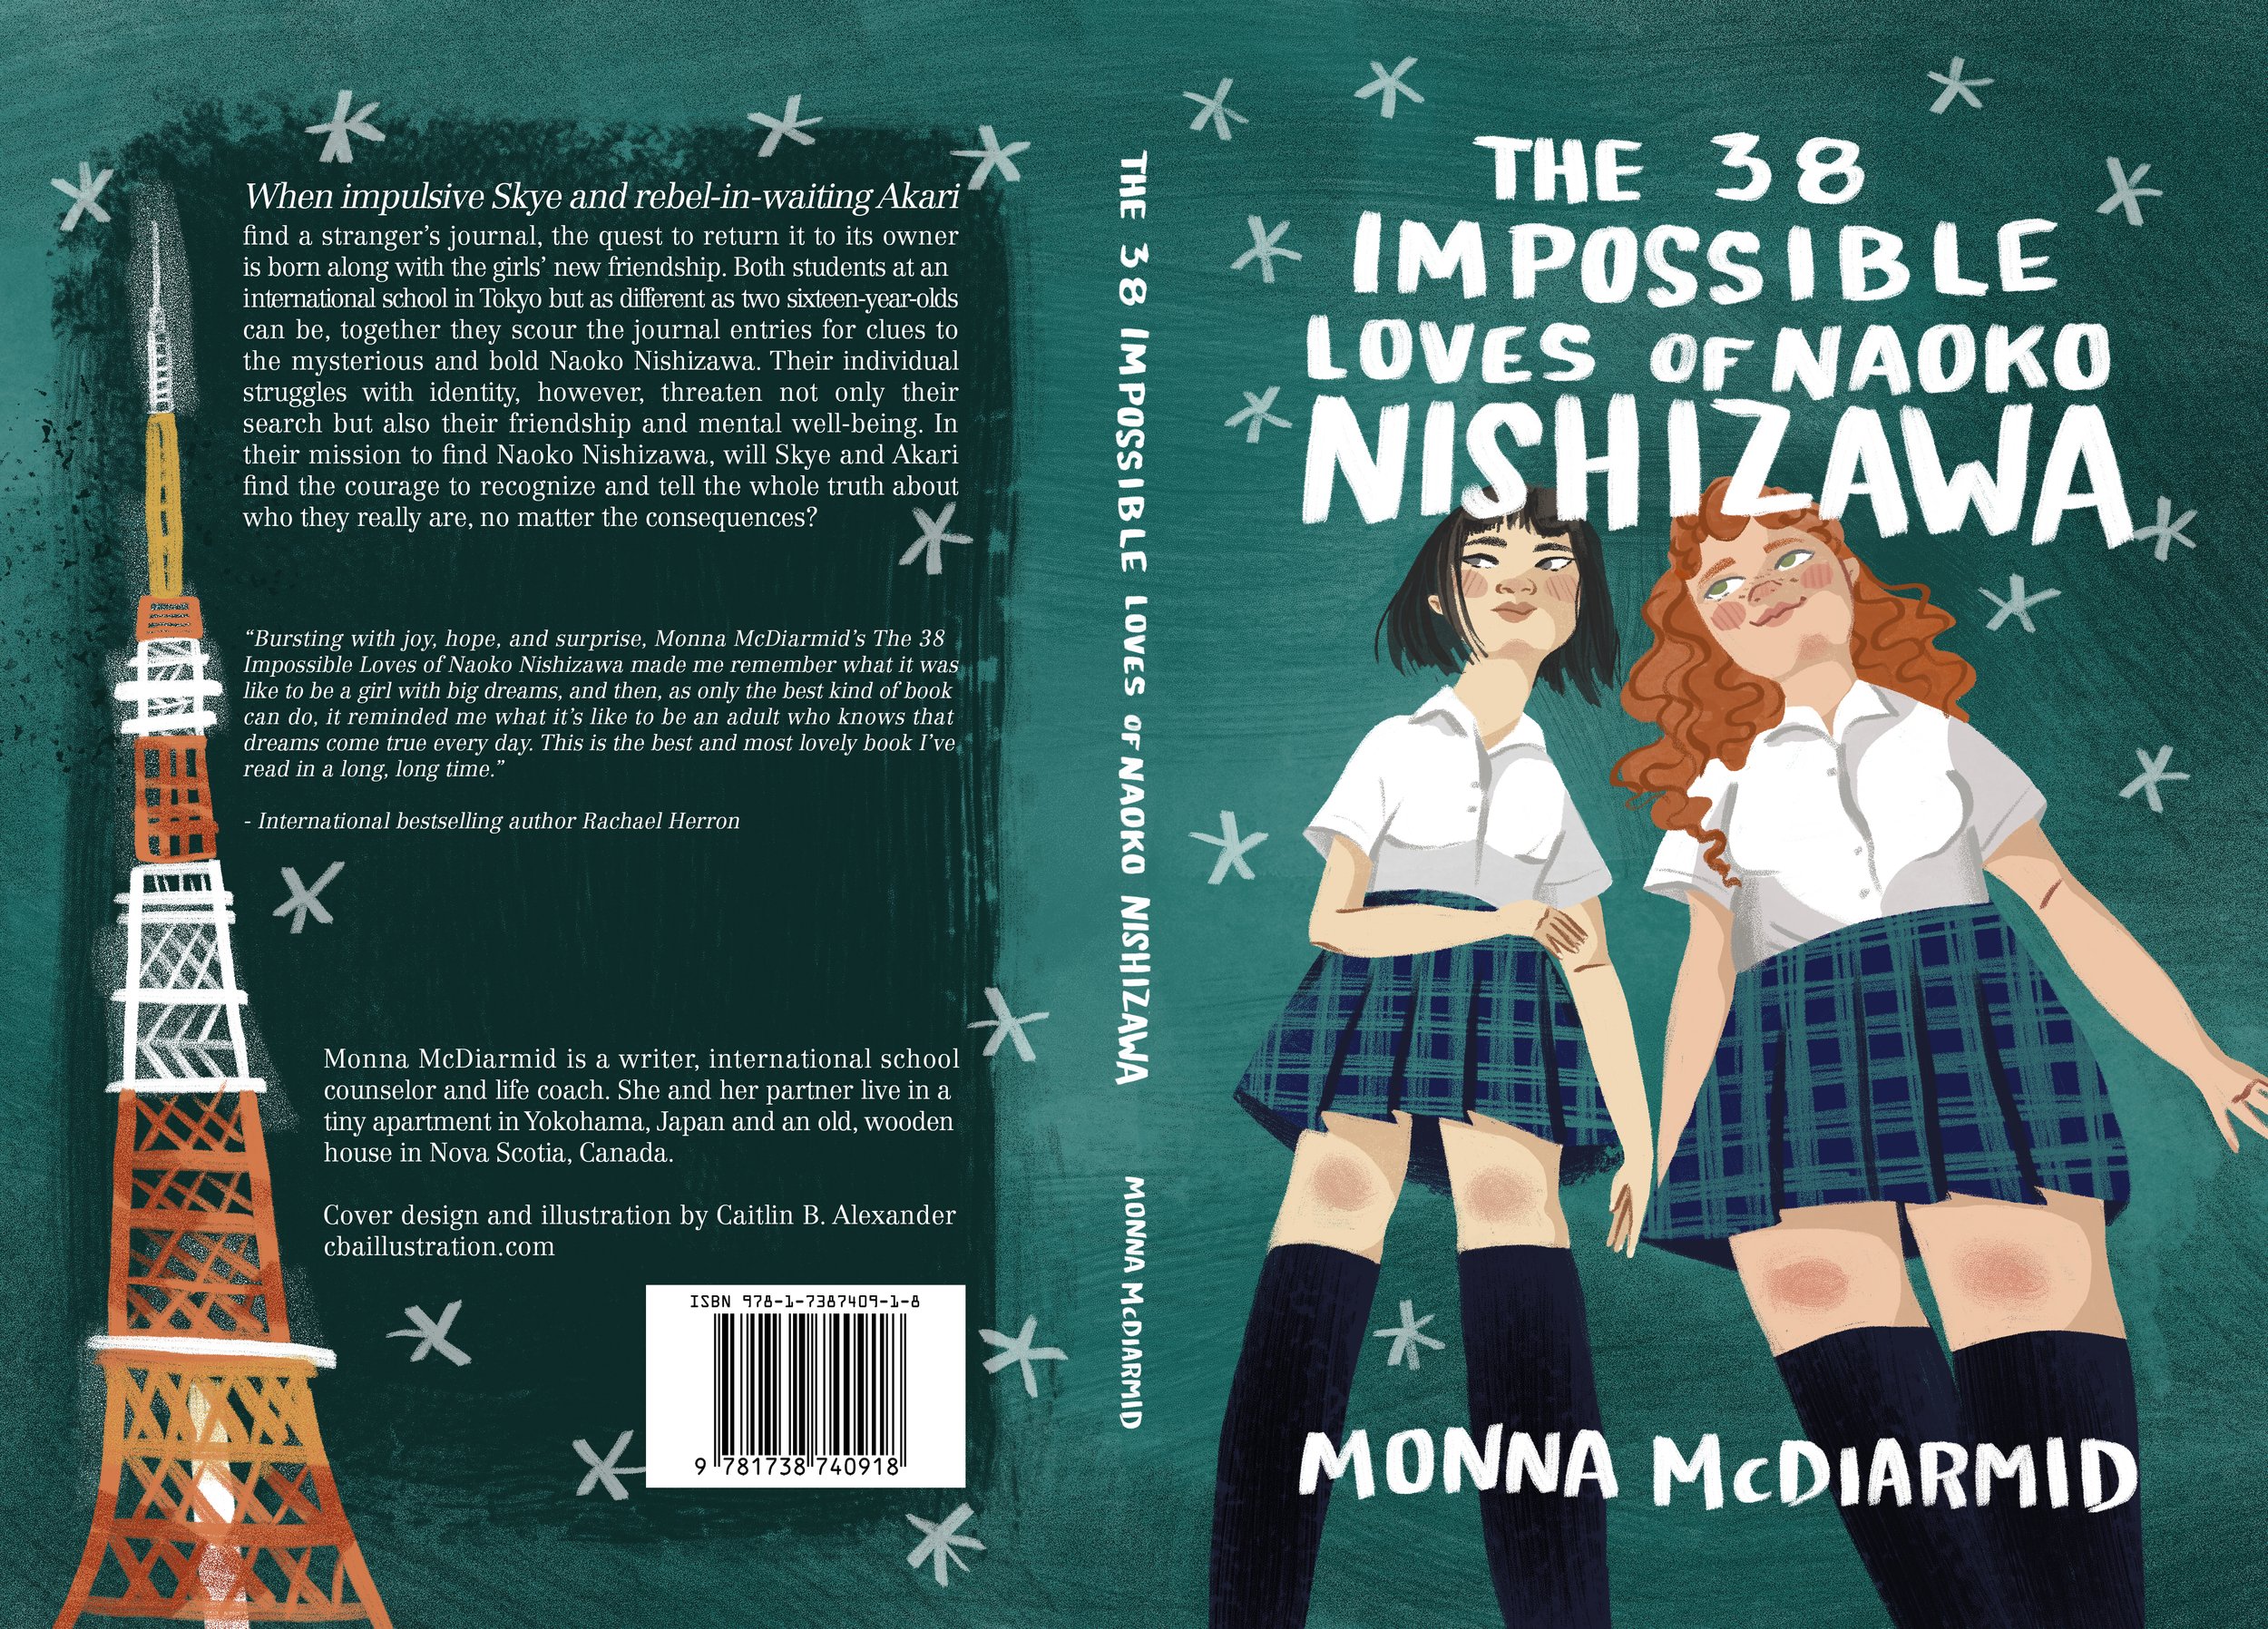 The 38 Impossible Loves of Naoko Nishizawa Cover Final 2 copy.jpg